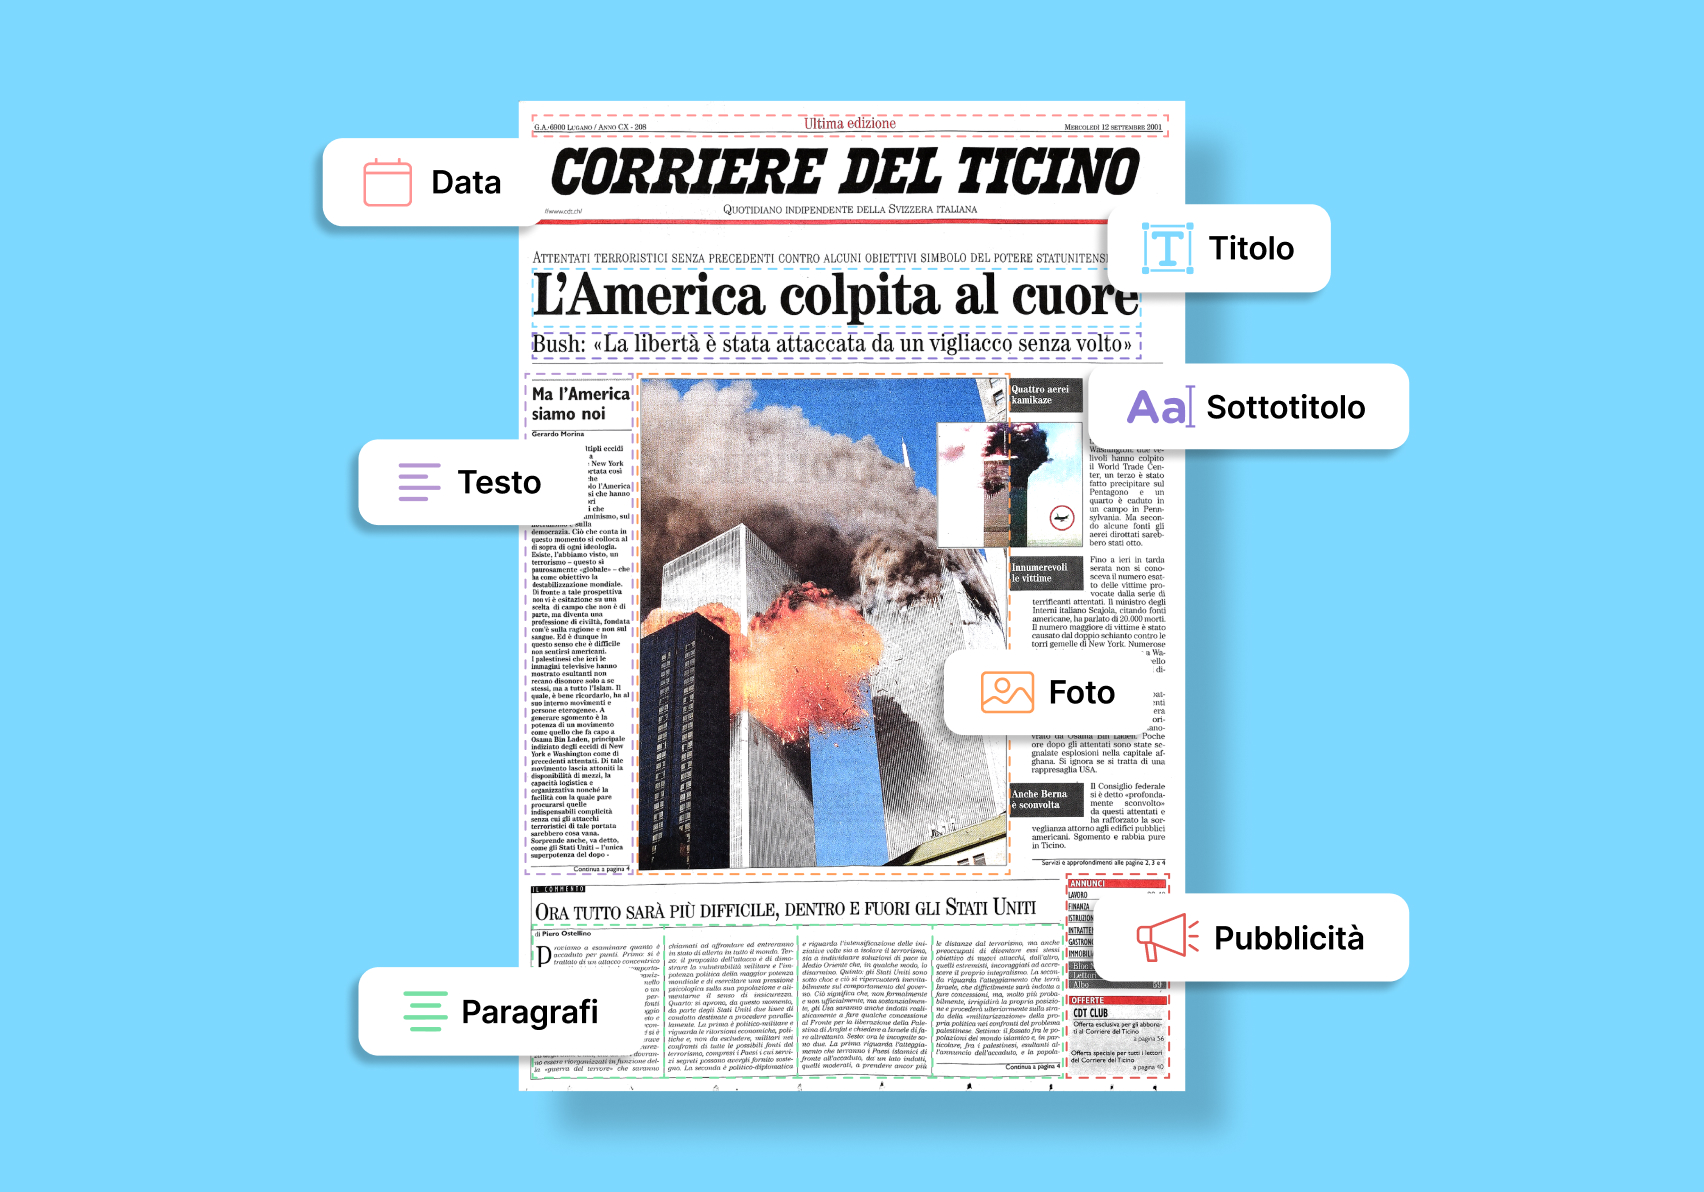 Goodcode Corriere del Ticino Textract